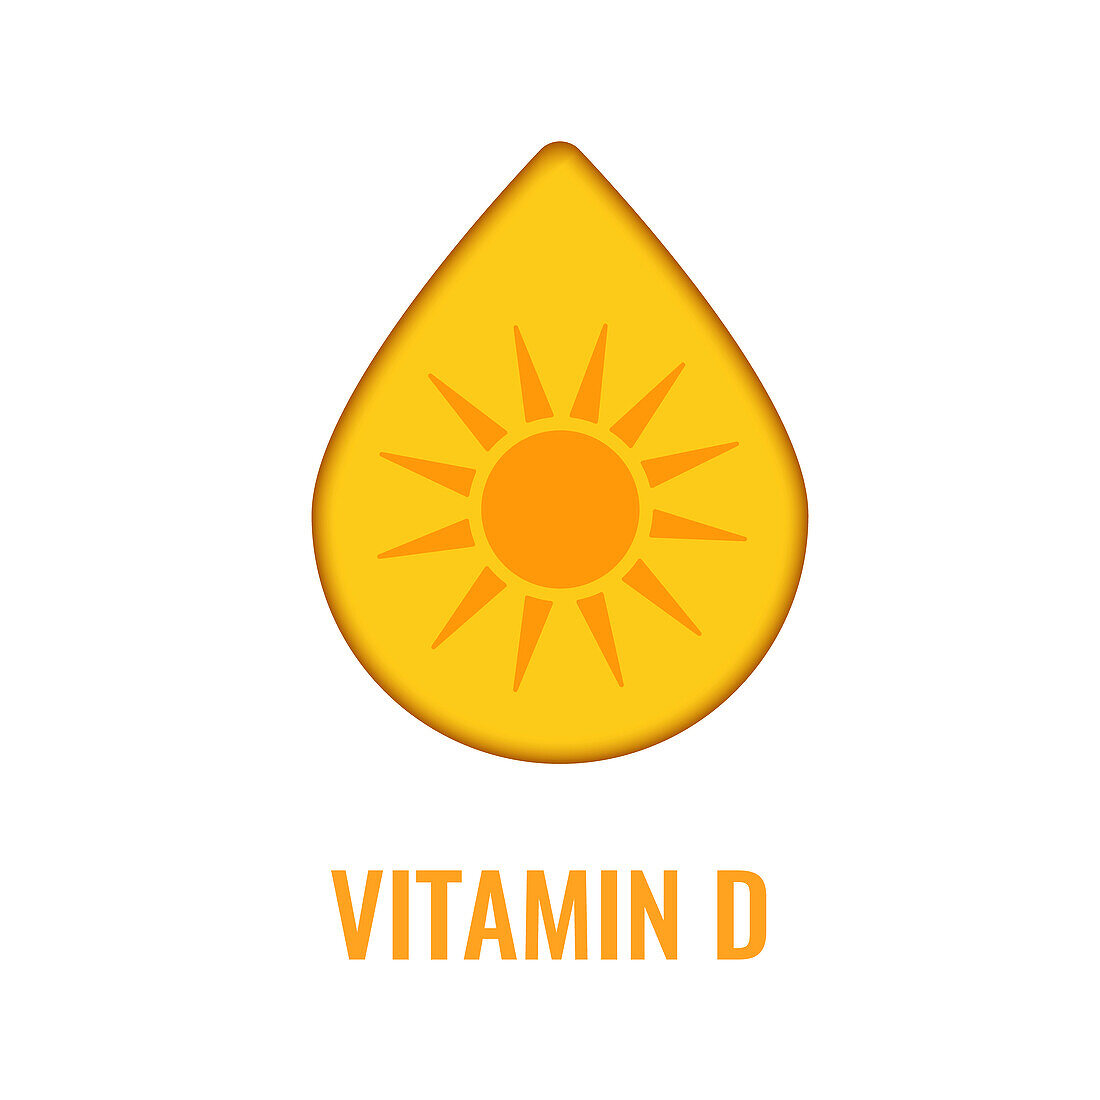 Vitamin D, conceptual illustration